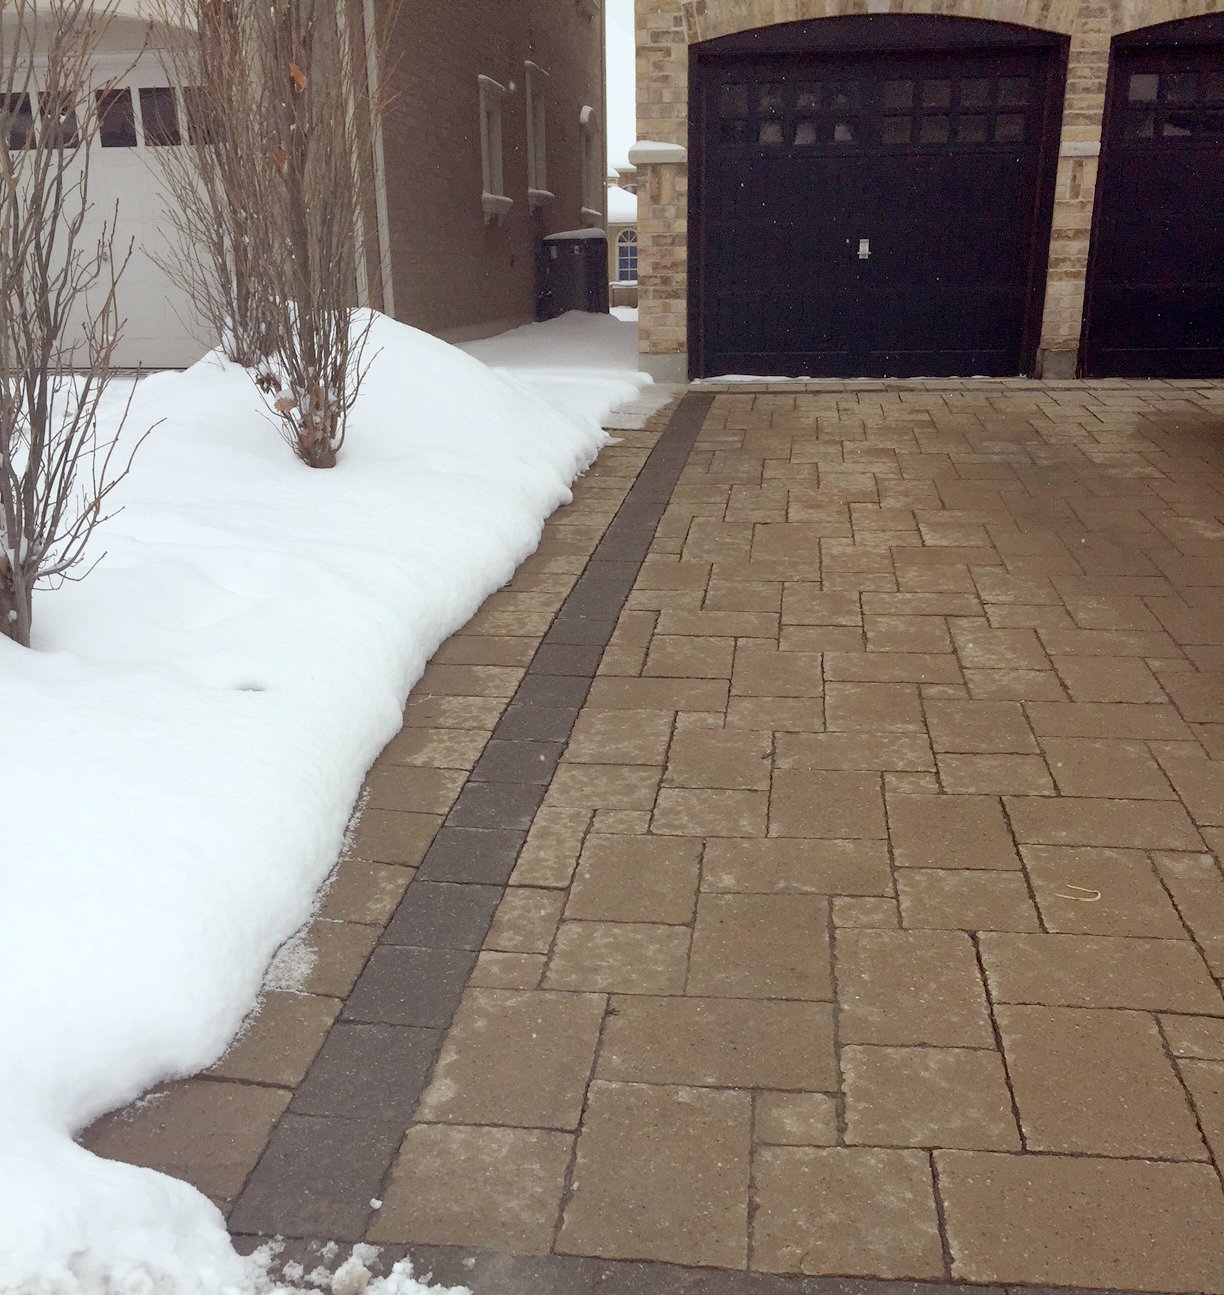 https://ik.warmlyyours.com/img/laura-s-parents-driveway-with-snow-melt-system-818866.jpeg?ik-sdk-version=ruby-2.0.1